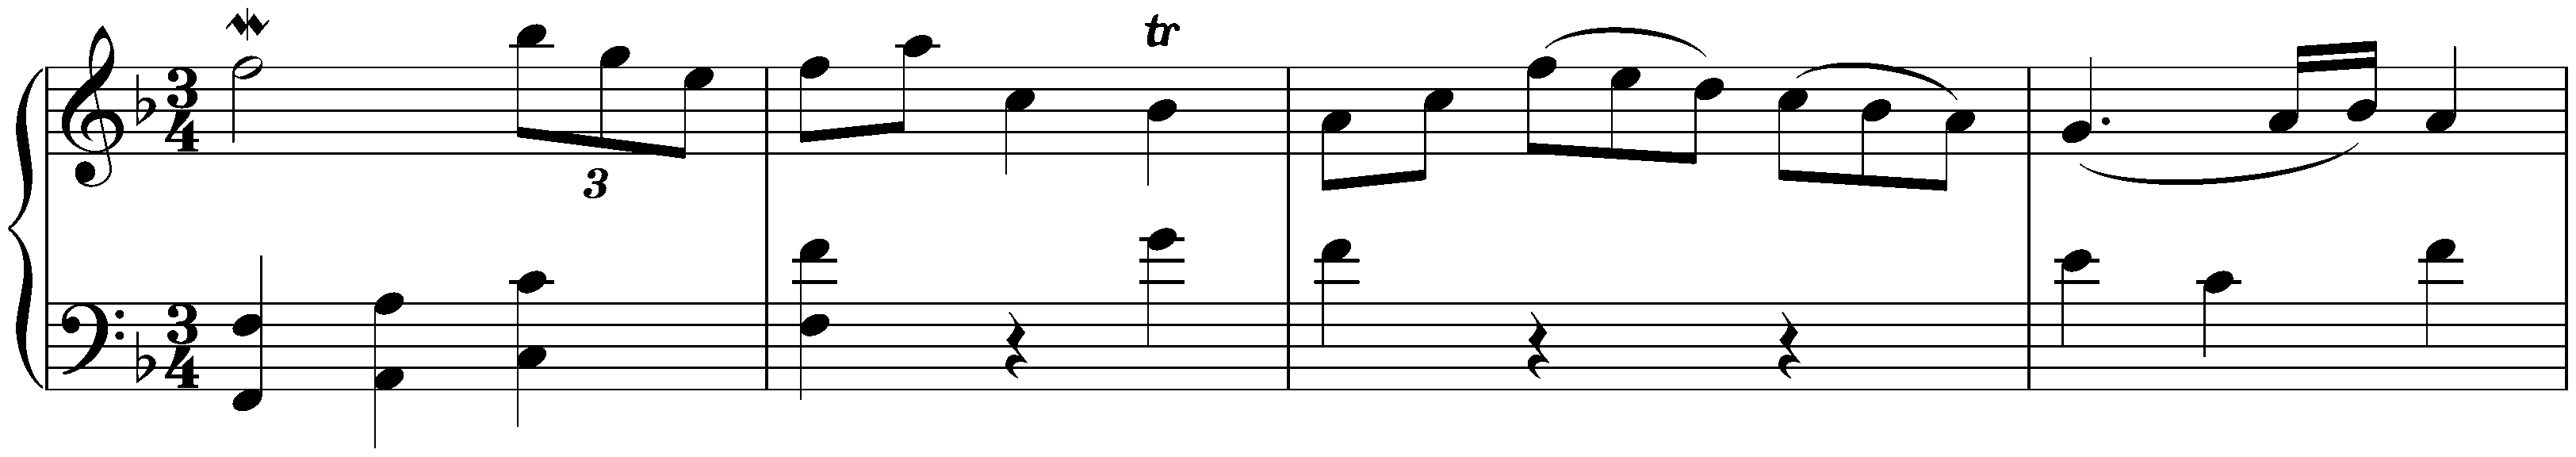 Sonata in F major, Hob. XVI:9; 2. Menuet – Trio